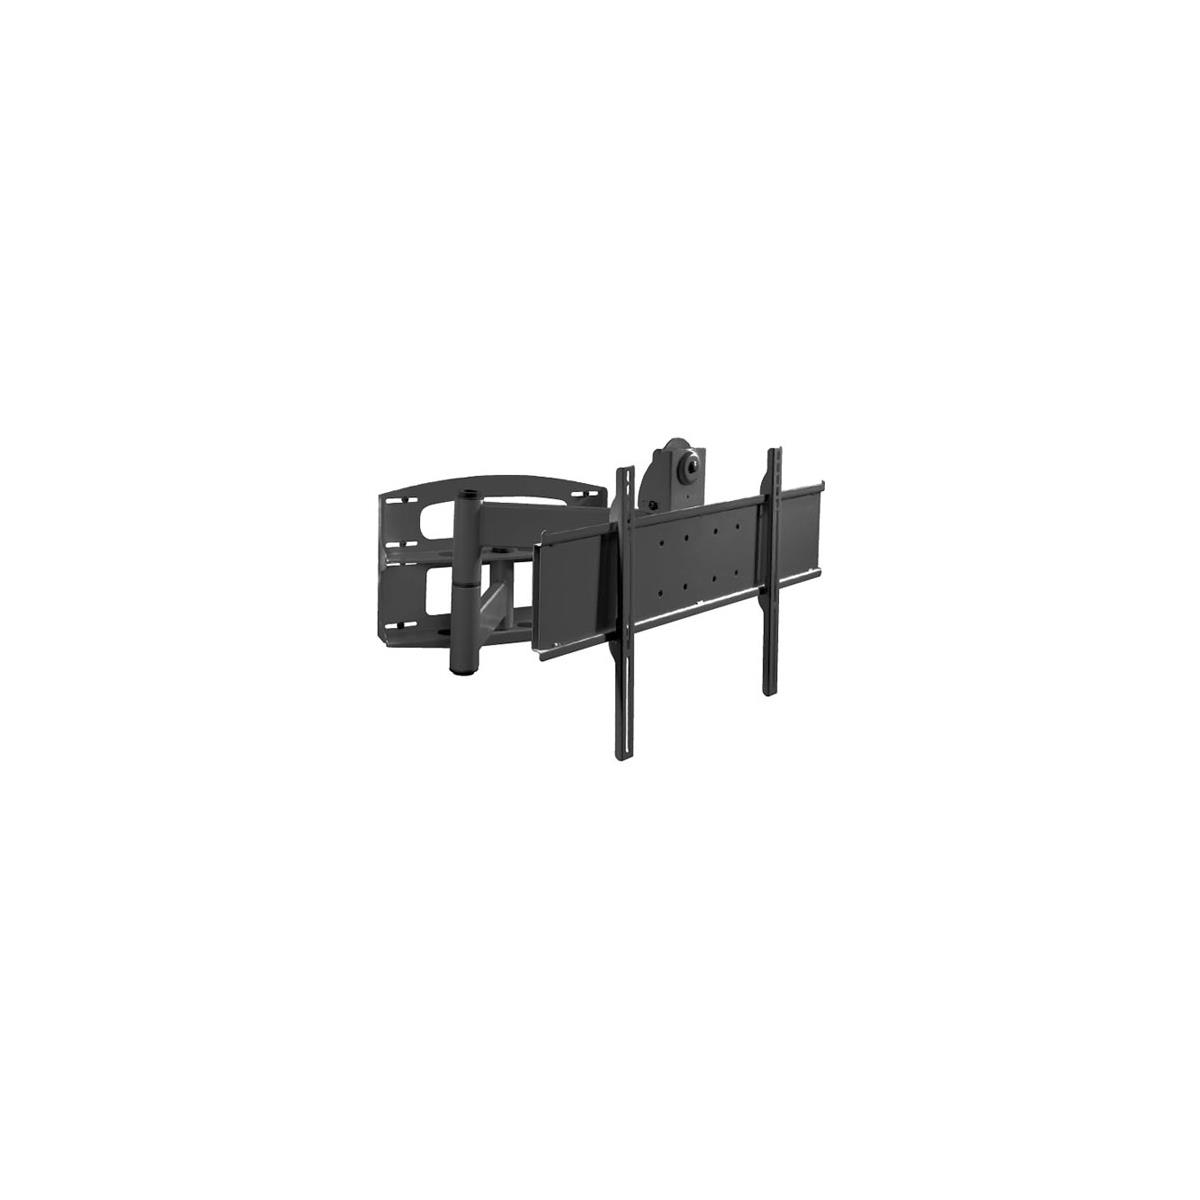 Peerless Articulating Wall Arm with Vertical Adjustment, Black -  PLAV60-UNLP